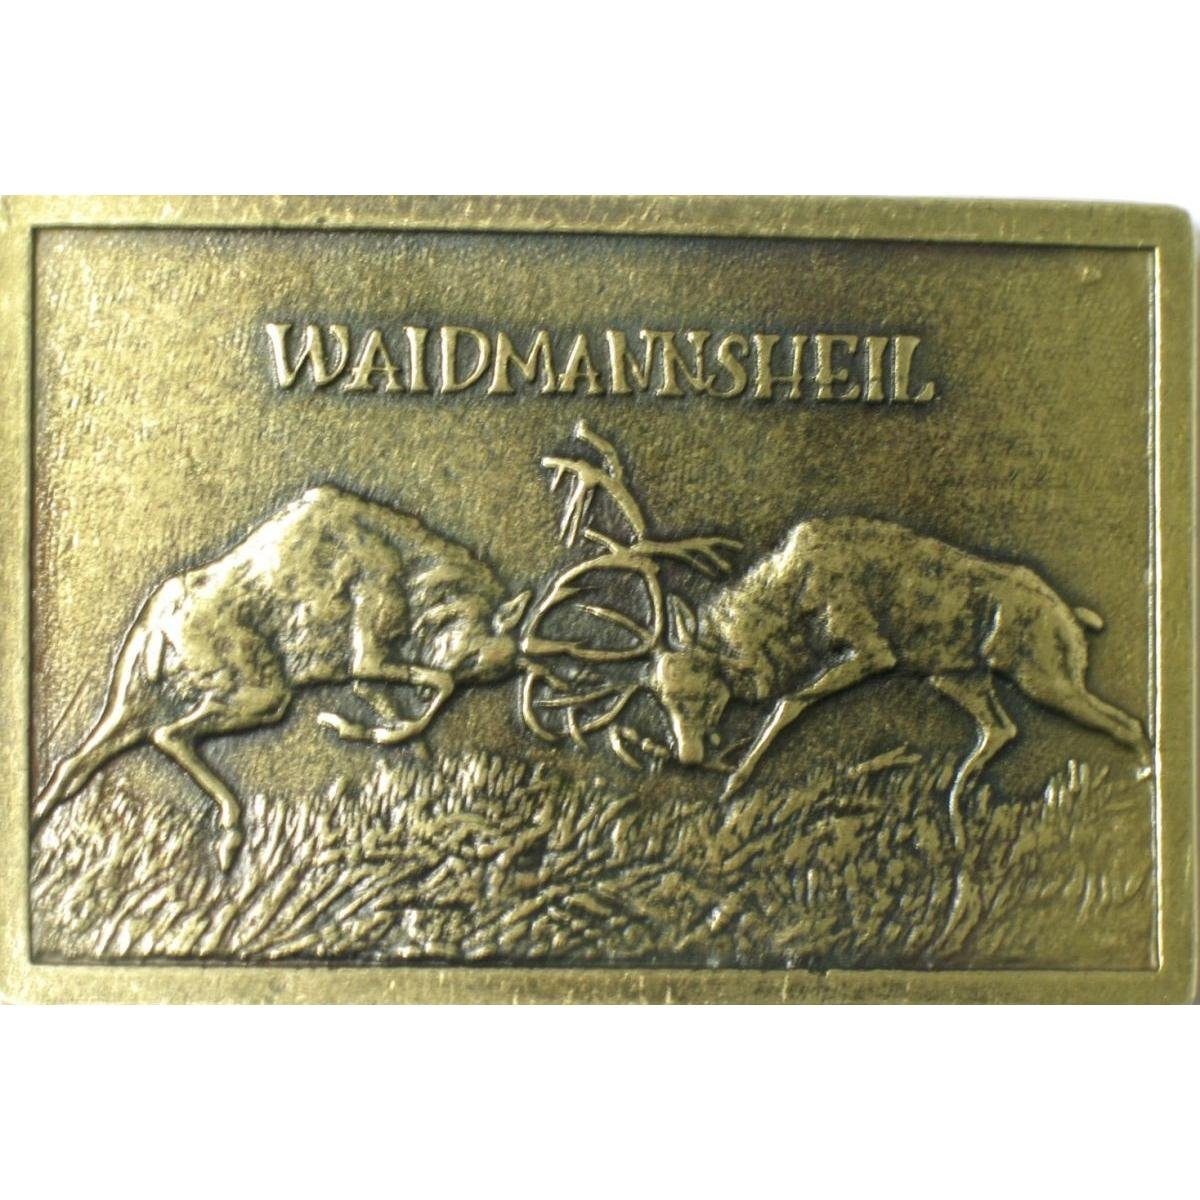 BELTINGER Gürtelschnalle Waidmannsheil Kämpfende Hirsche 4,0 cm - Buckle Gürtelschließe 40mm - Altmessing | Gürtelschnallen